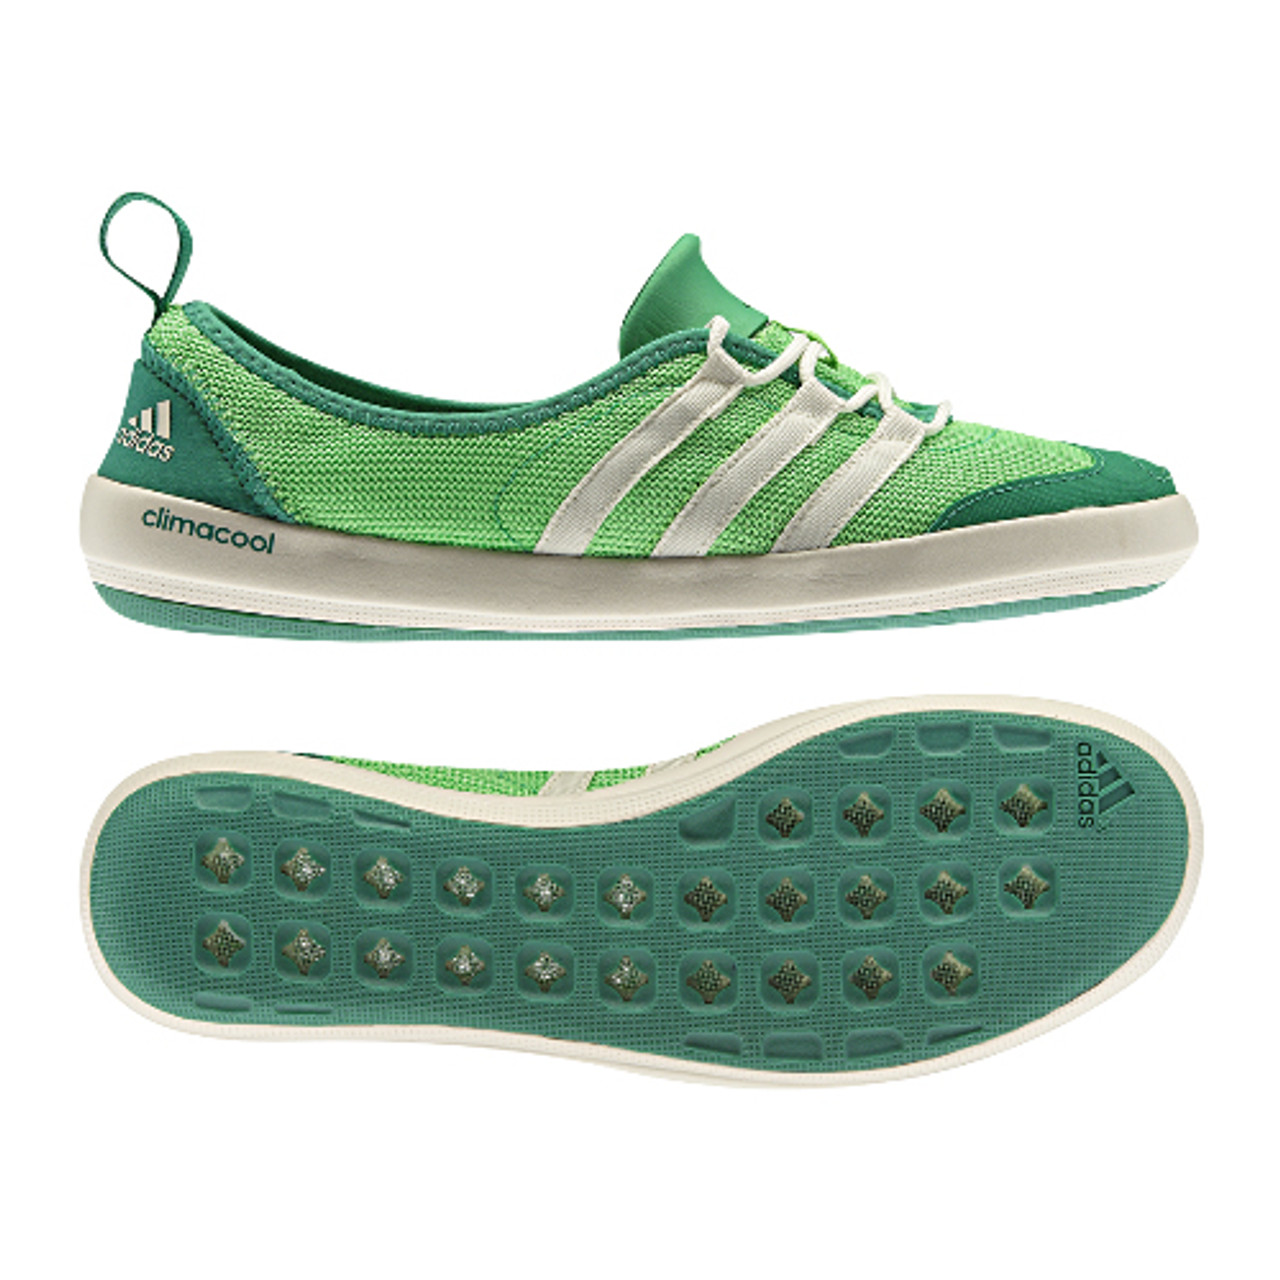 Adidas Climacool Boat Sleek Green Ladies Shoes - | Discount Adidas Ladies Athletic Shoe & More - Shoolu.com | Shoolu.com